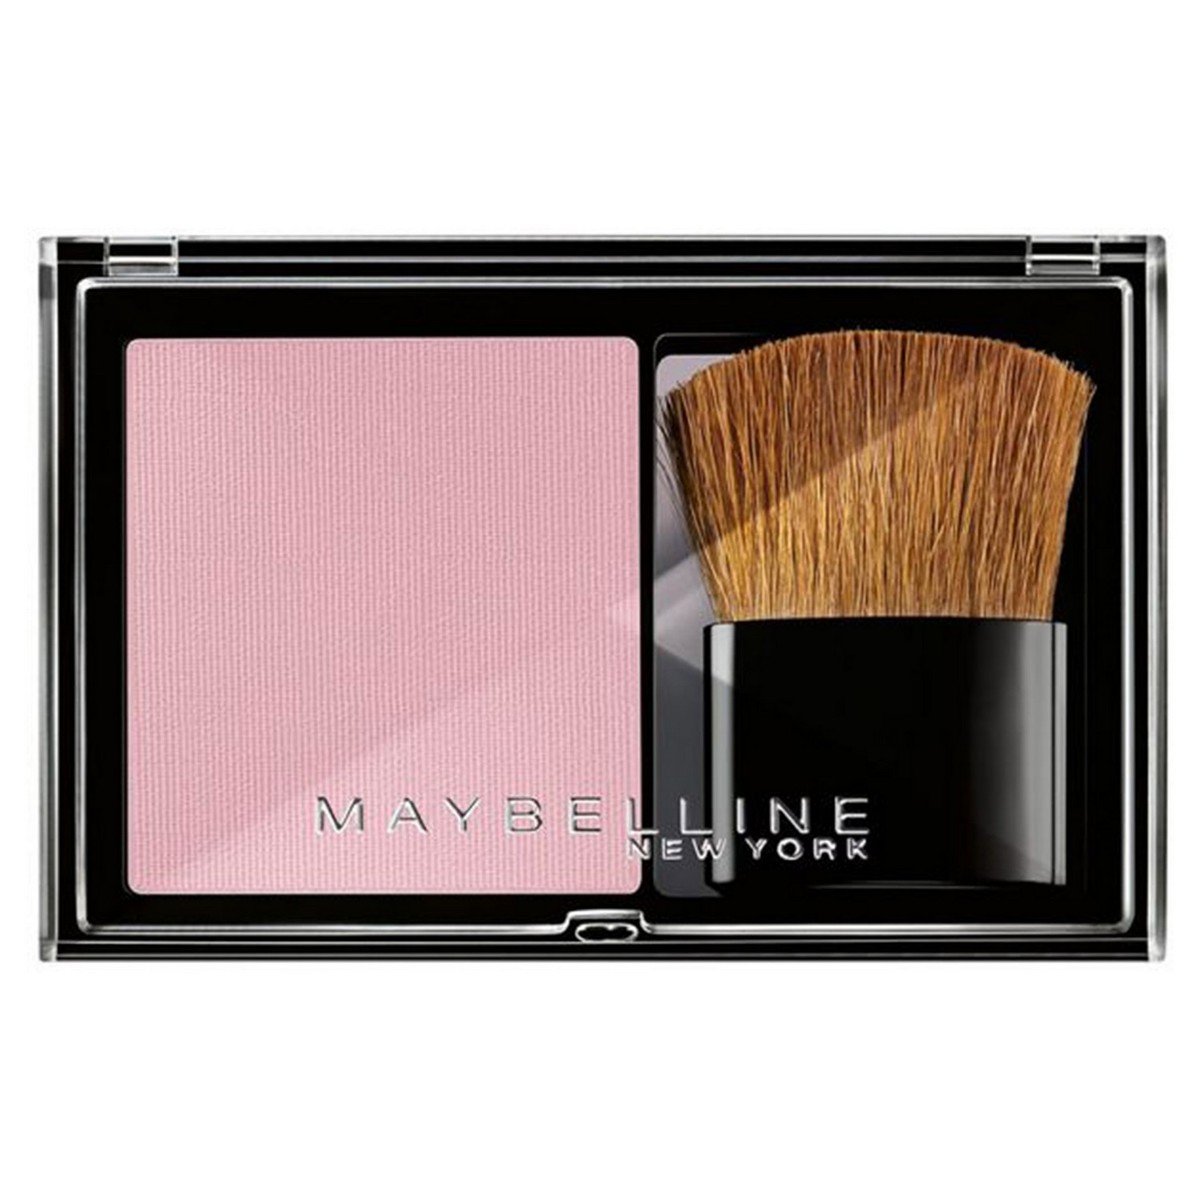 Maybelline New York Expert Wear Blush - Rose Wood 62 1pc